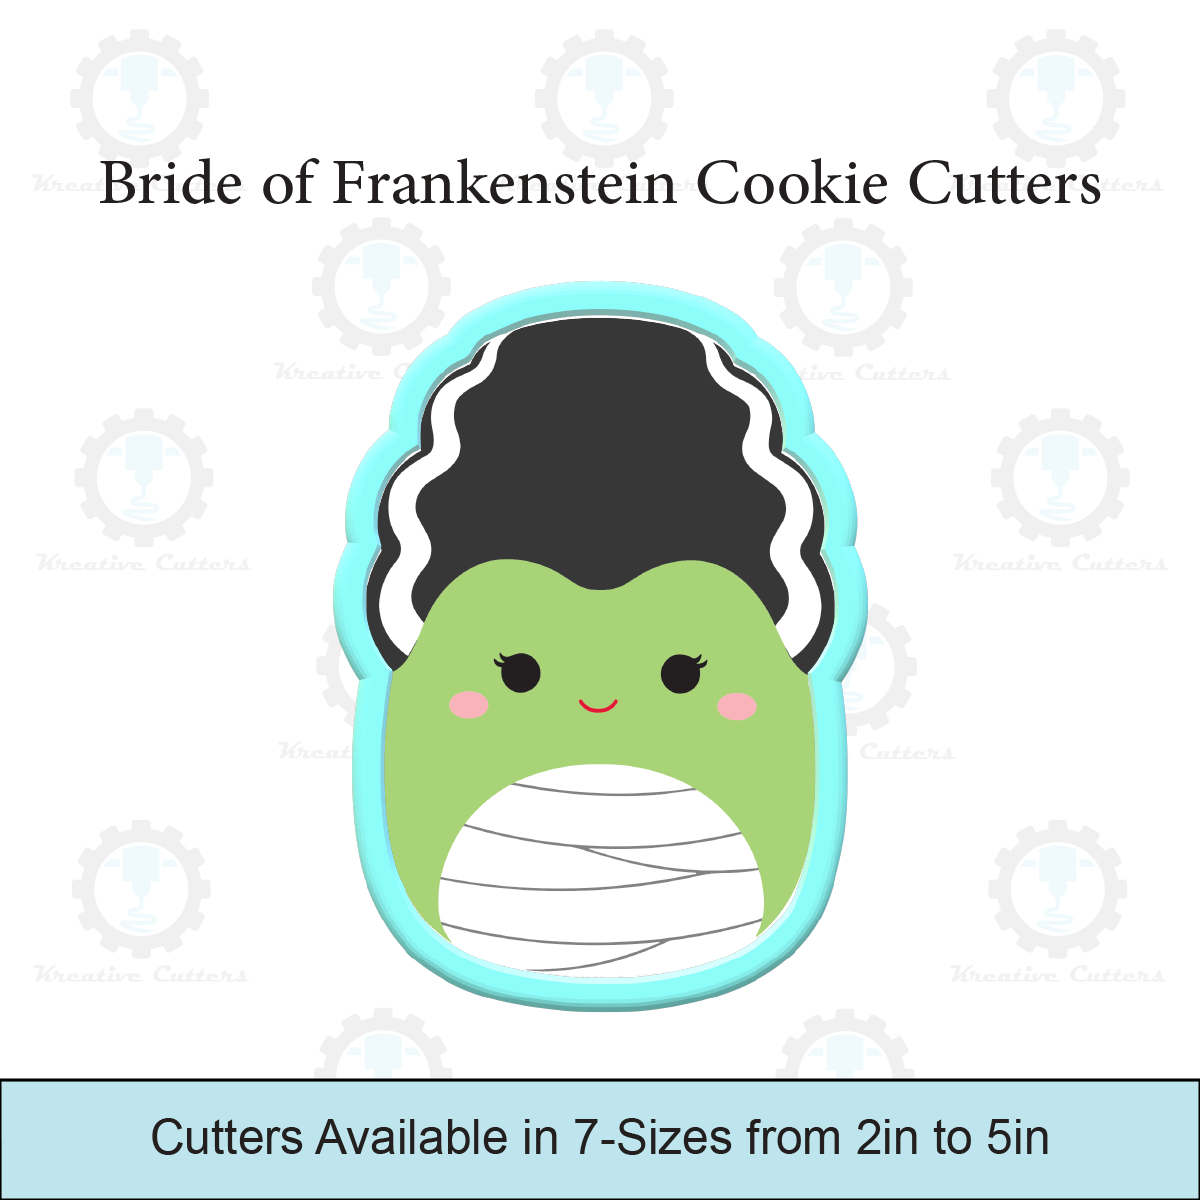 Bride of Frankenstein Cookie Cutters